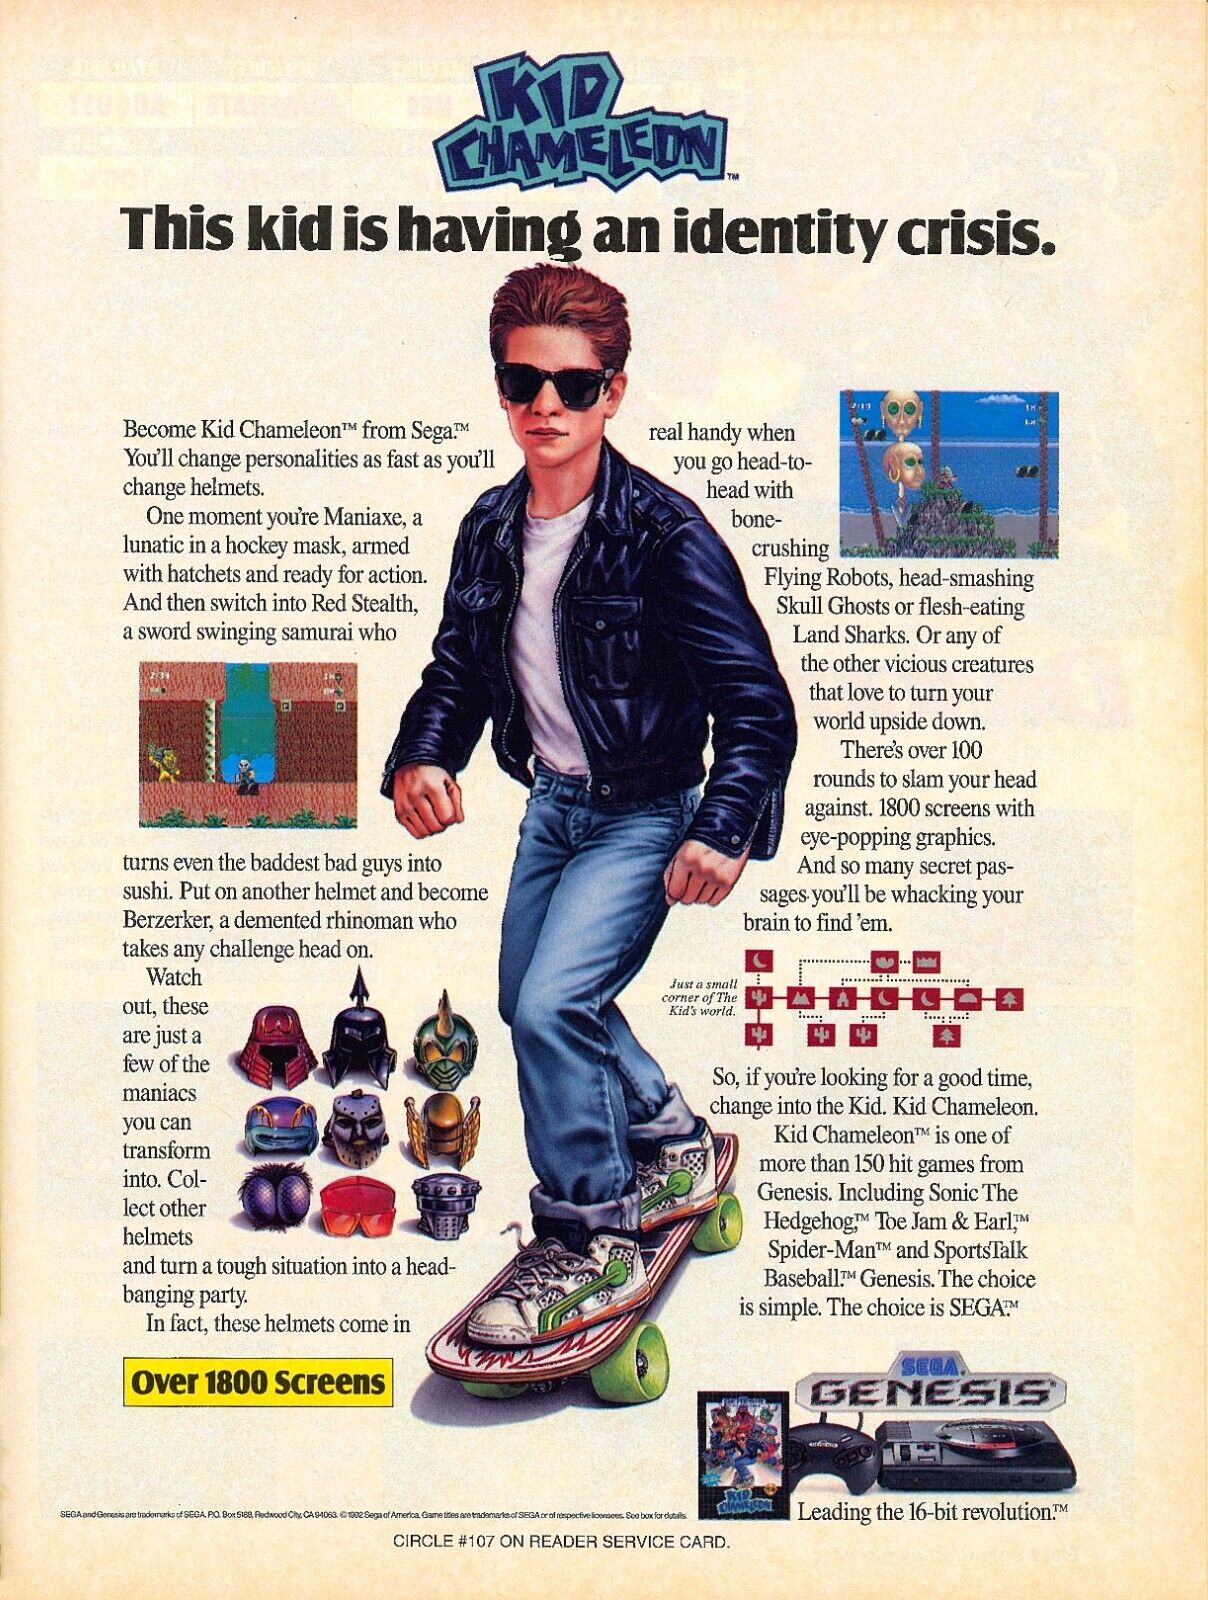 Kid Chameleon Sega Genesis 1992 Game Promo Ad Wall Art Print Poster - Glossy